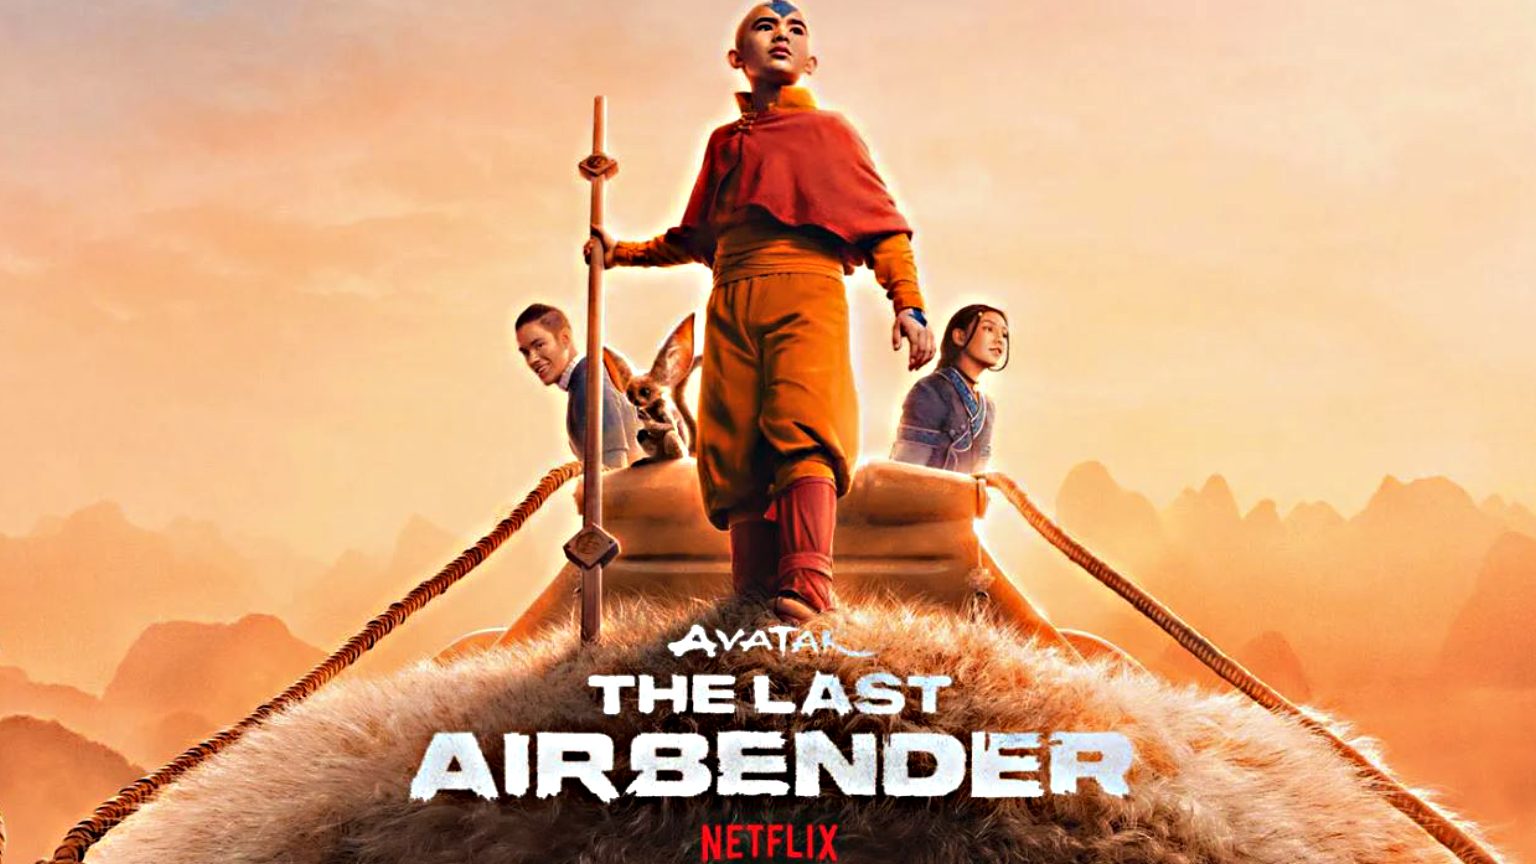 Avatar The Last Airbender (Netflix)